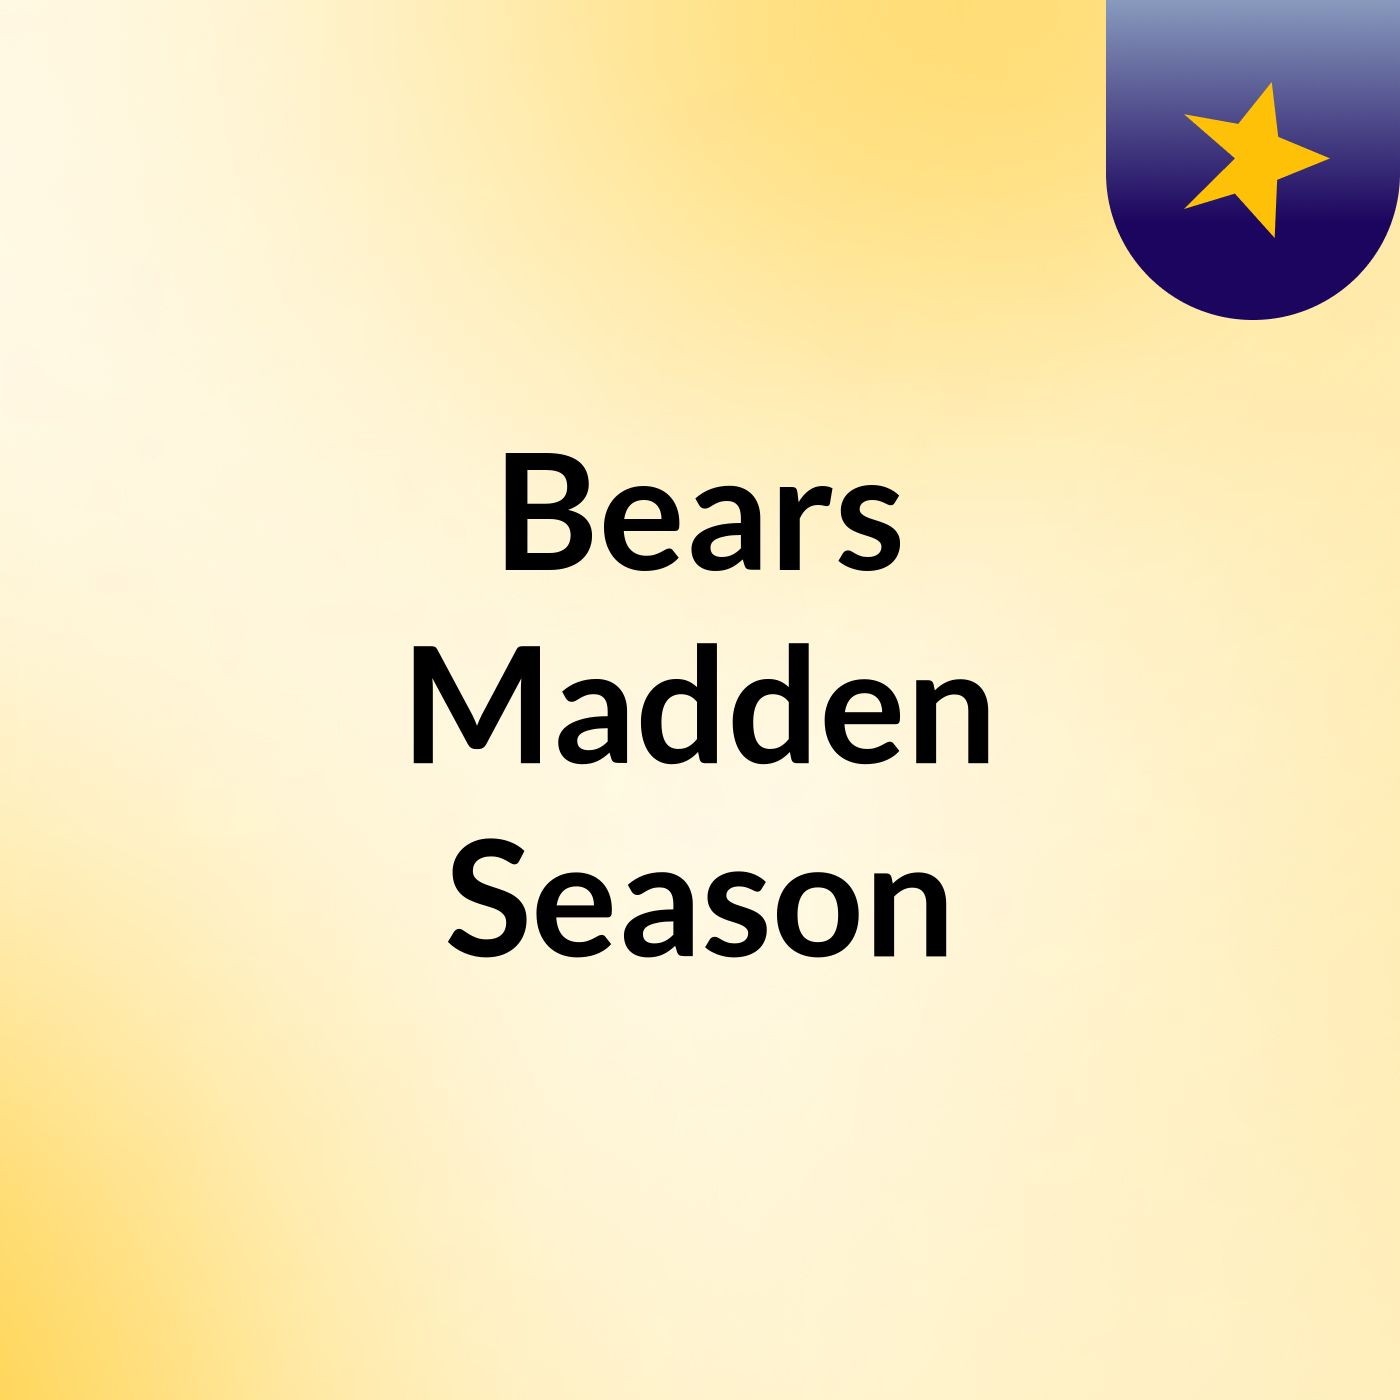 Bears Madden Season